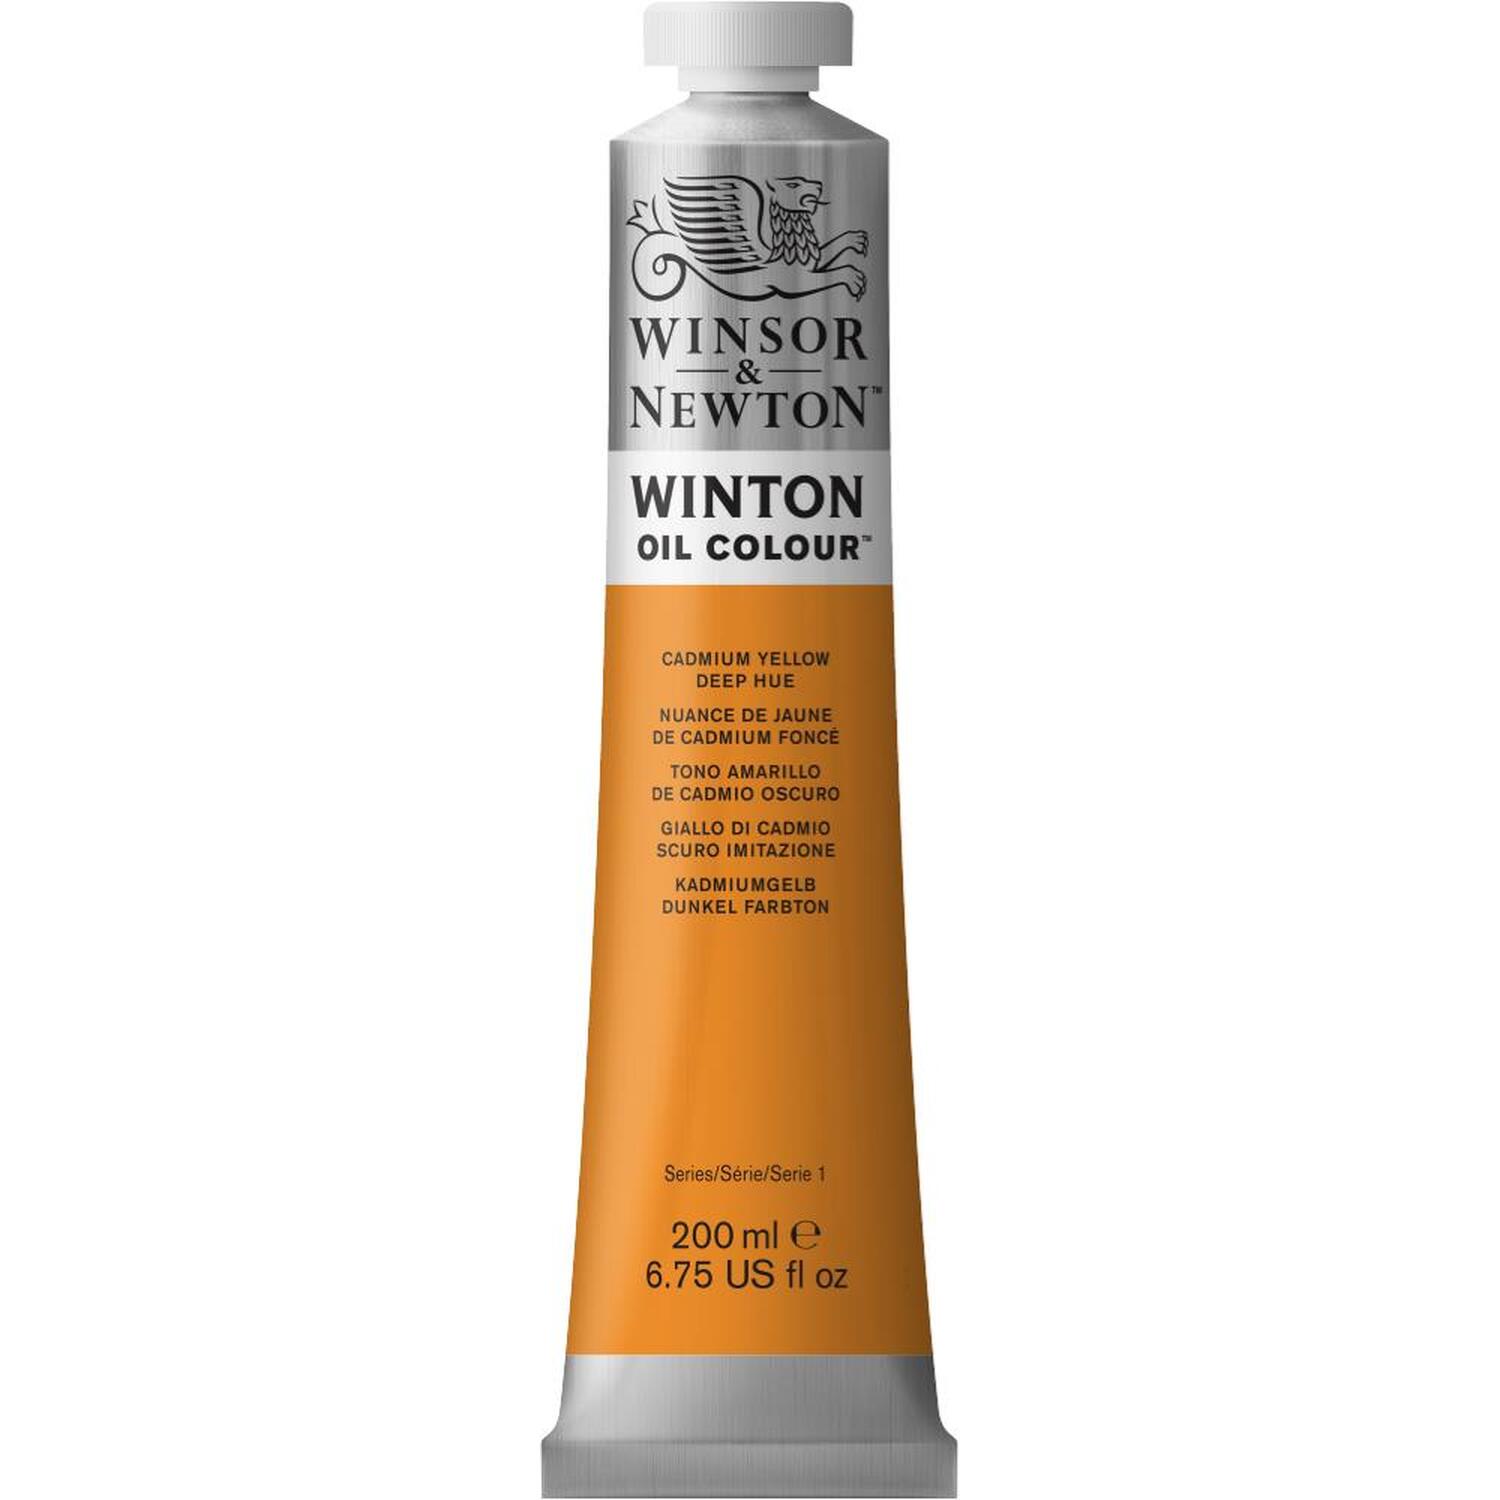 Winsor and Newton 200ml Winton Oil Colours - Cadmium Yellow Deep Hue Image